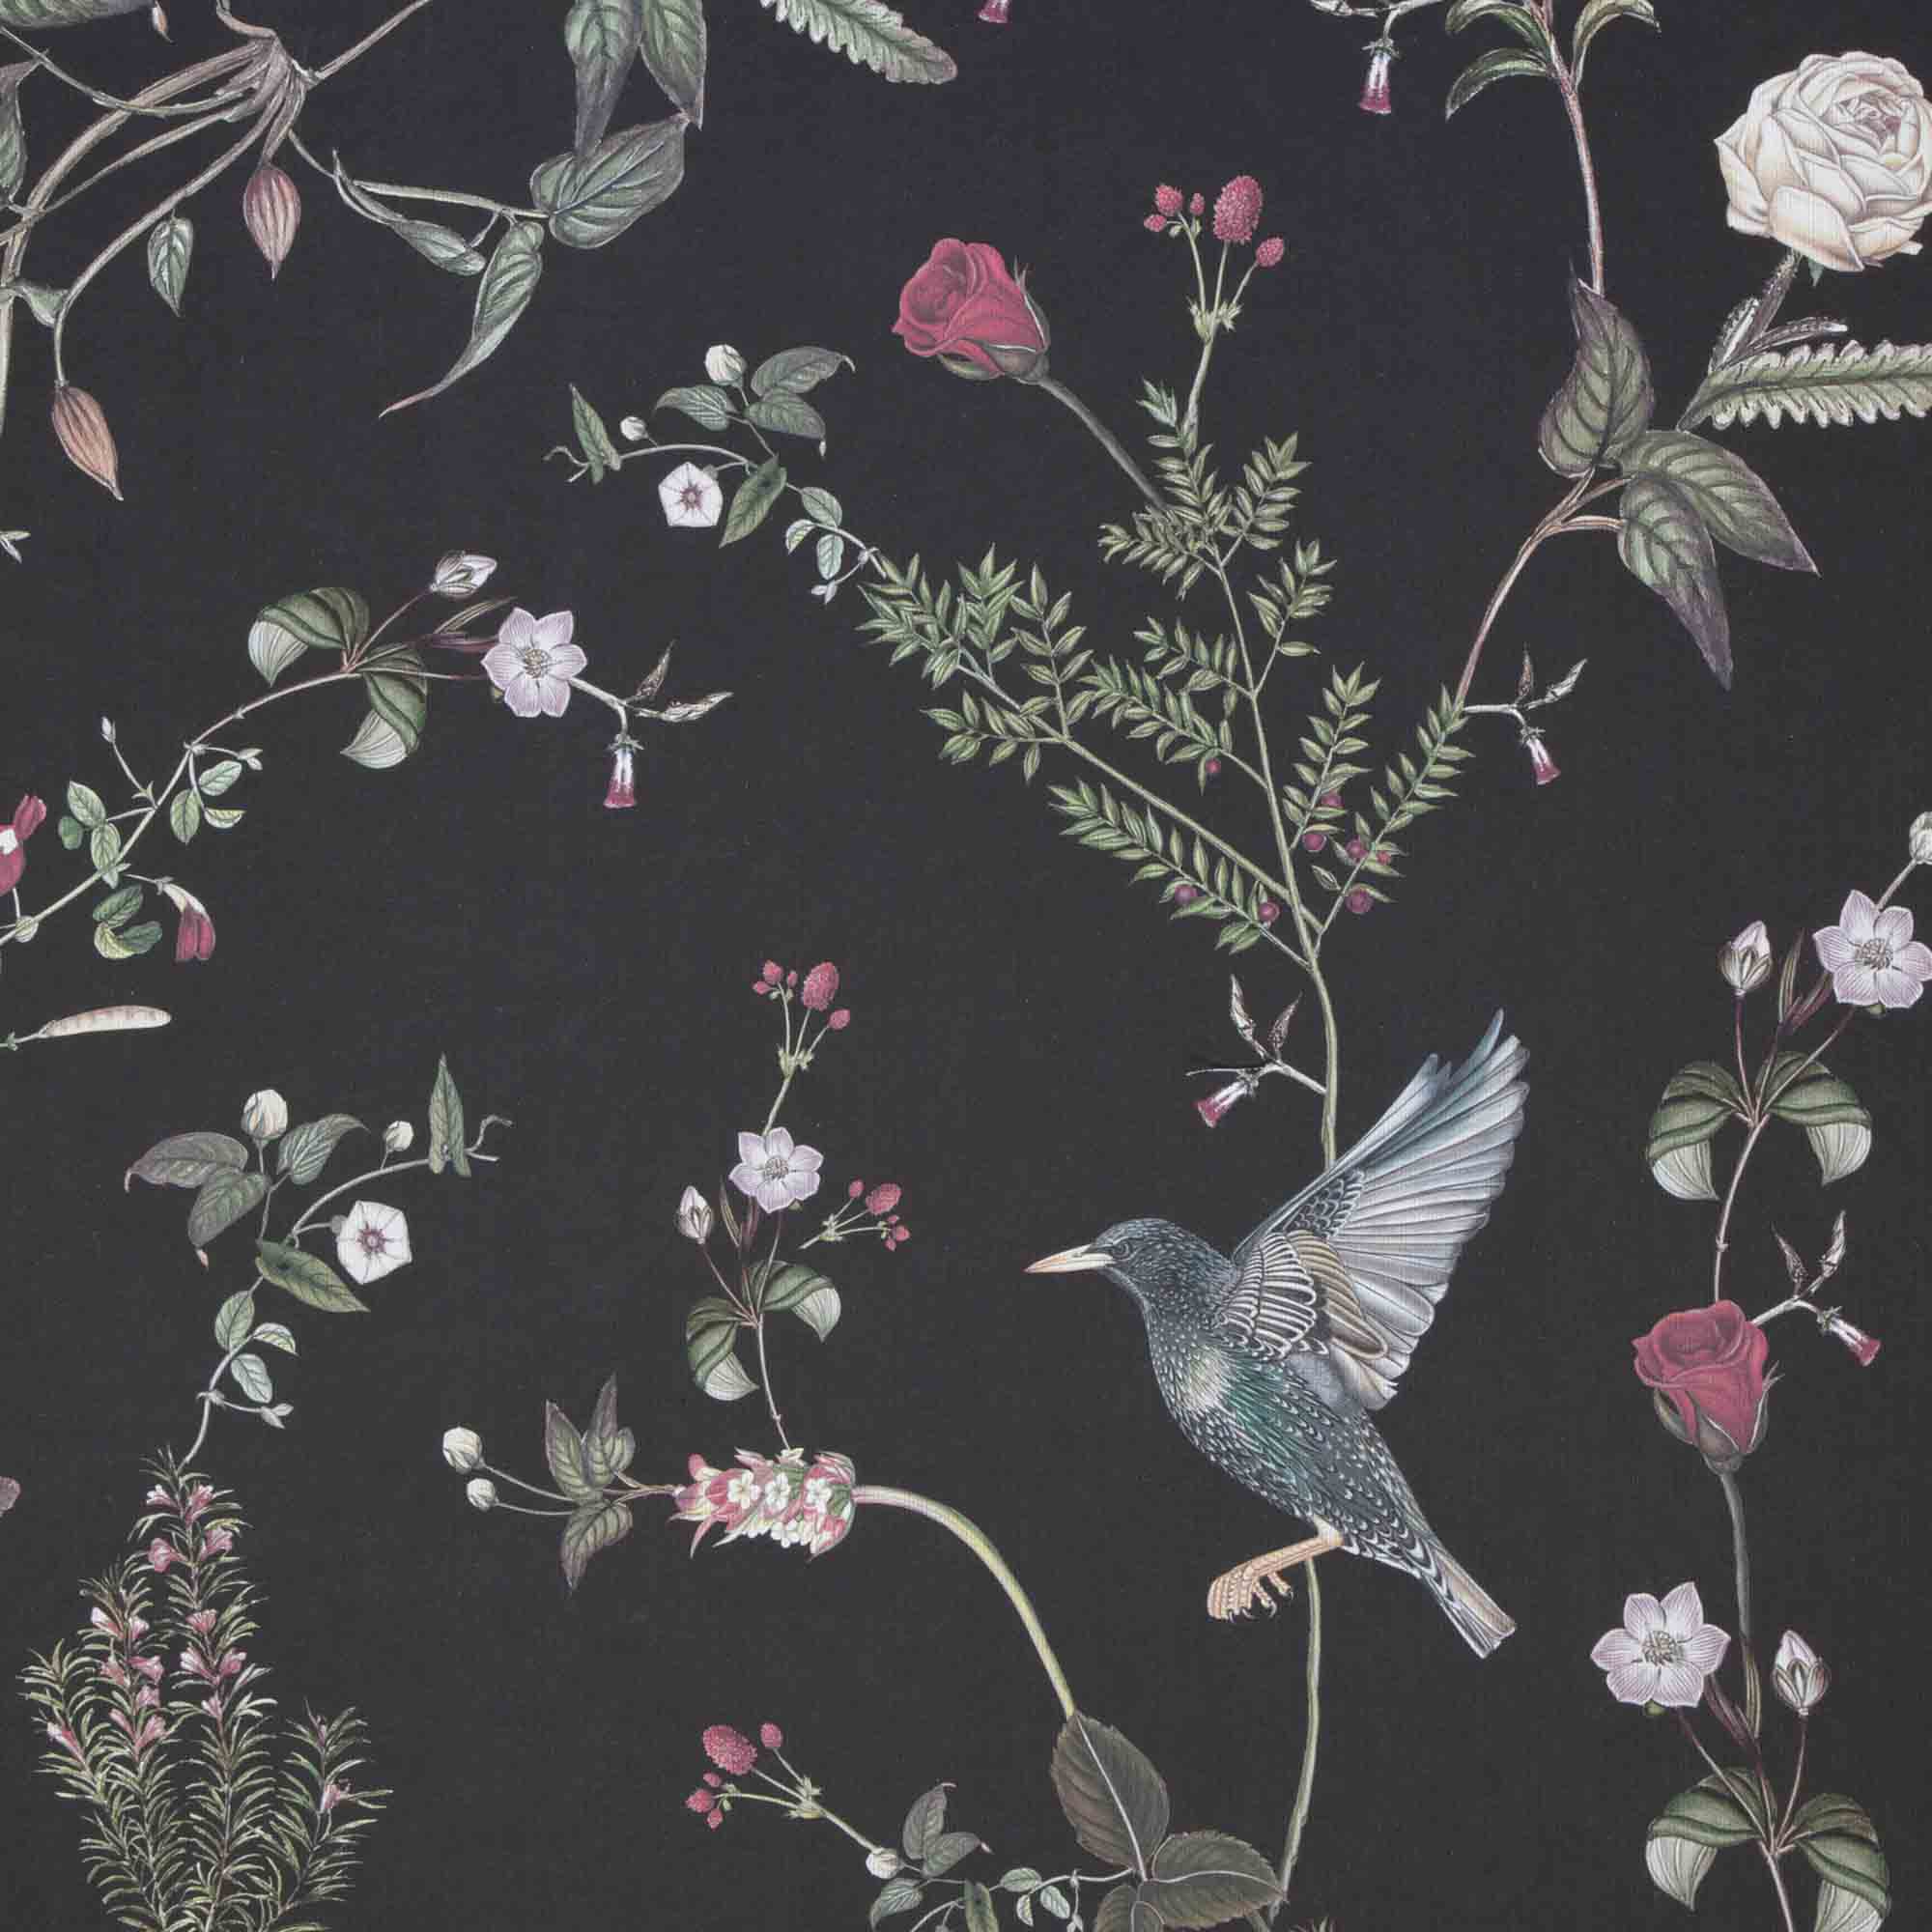 Starlings at Rose Garden Night - Wallpaper Swatch 18cm x 25cm